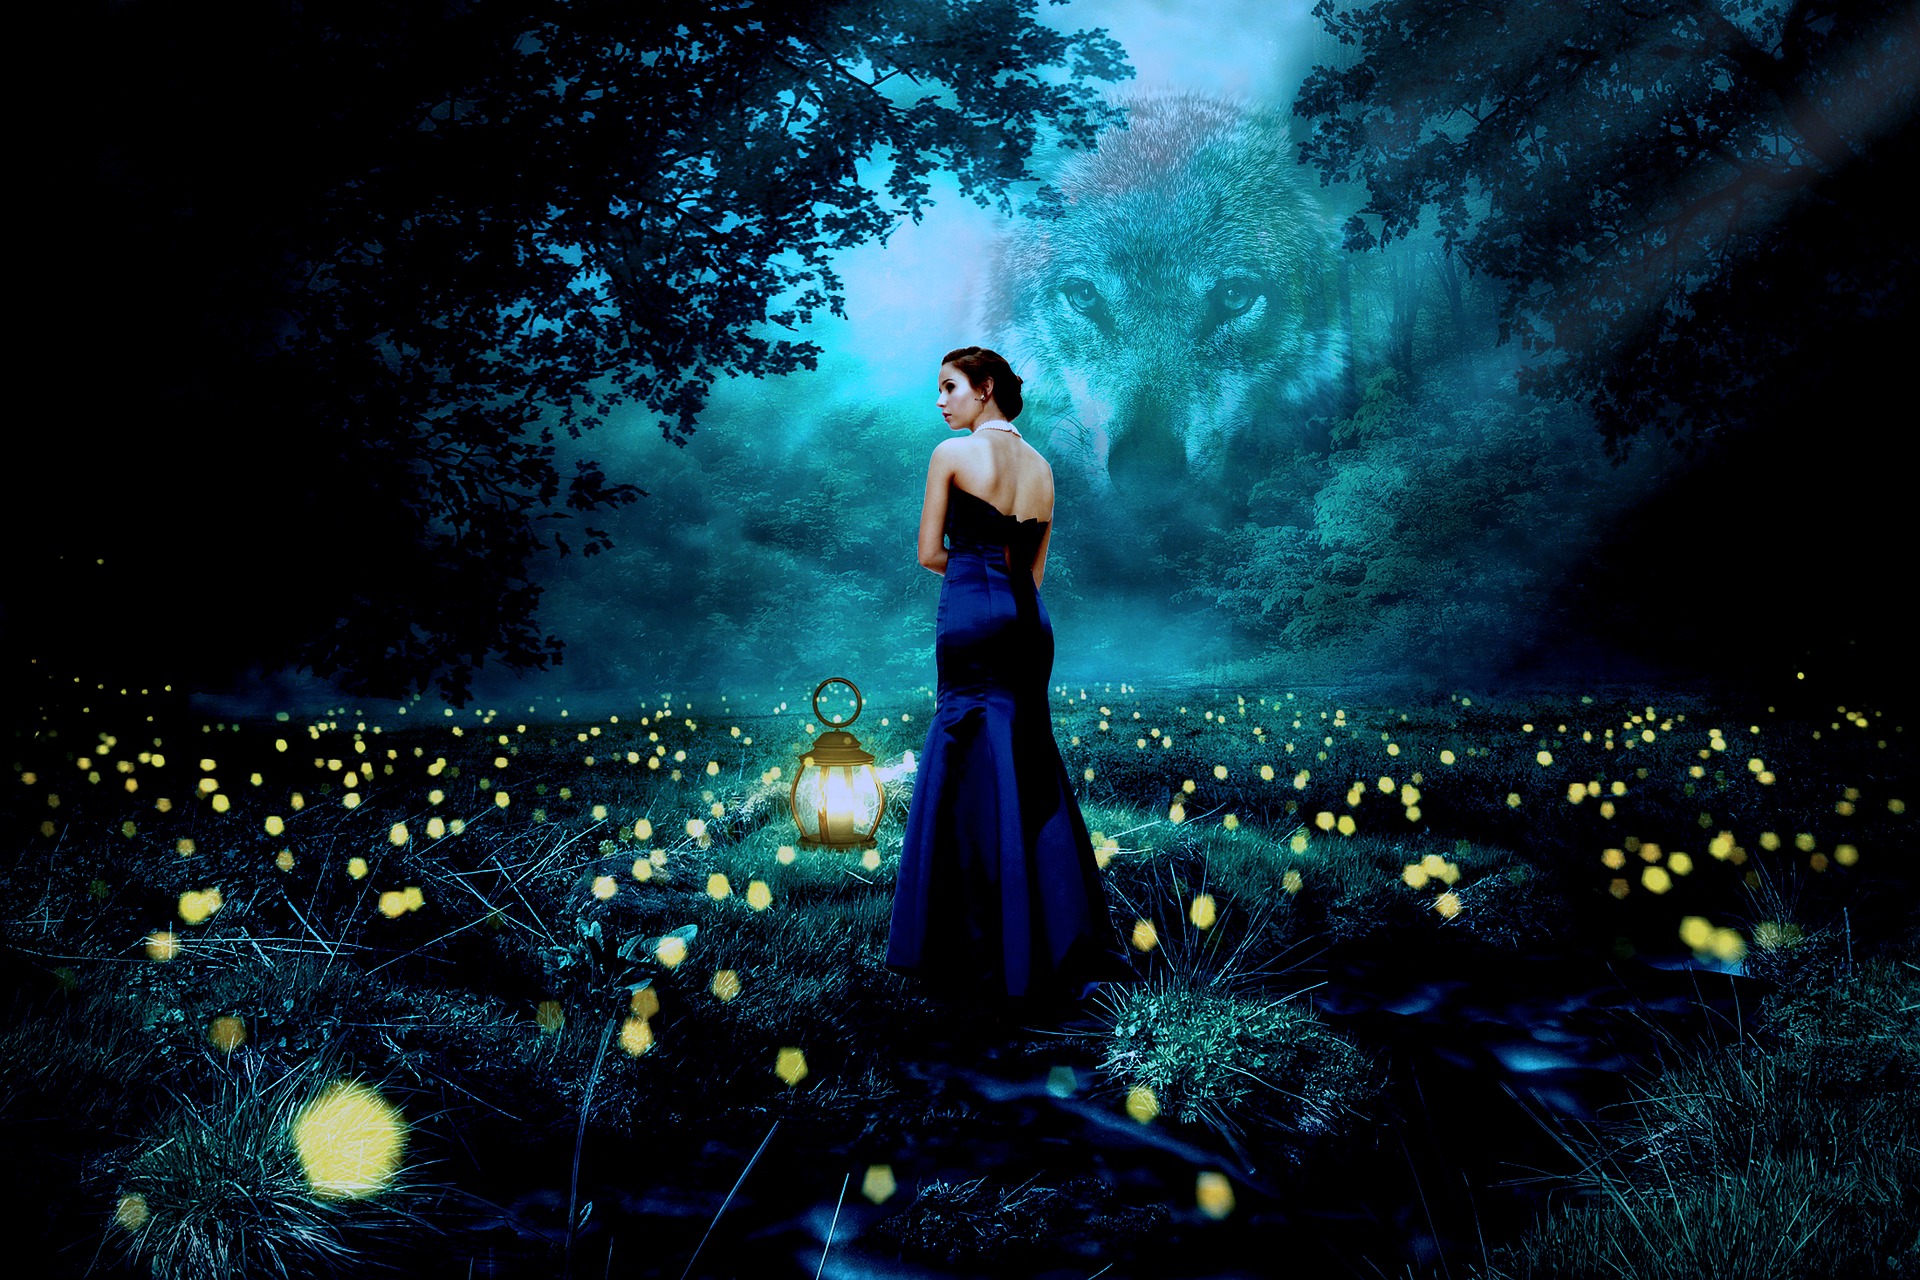 Adult fantasy romance novel: Girl standing in a forest field.jpg